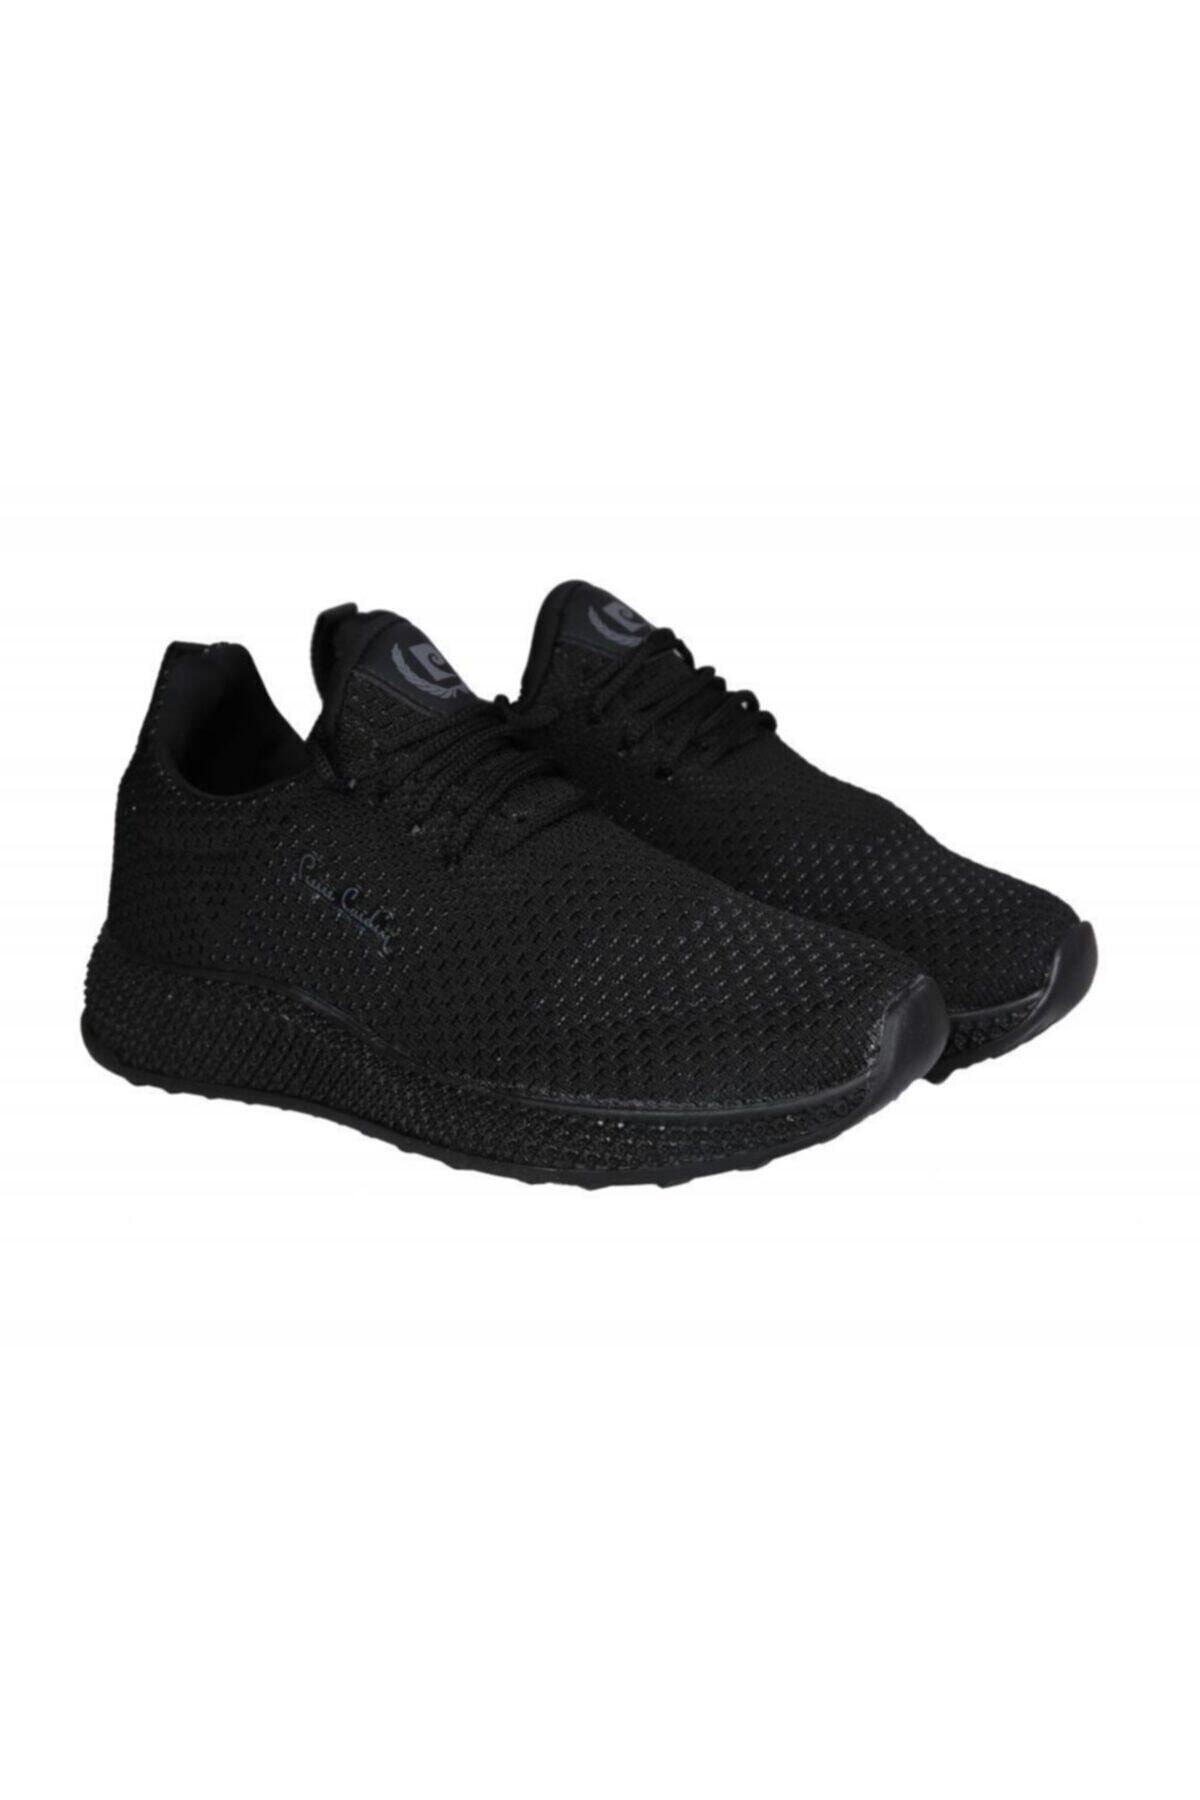 Pierre Cardin Pcs-10248 Unisex Siyah Sneakers